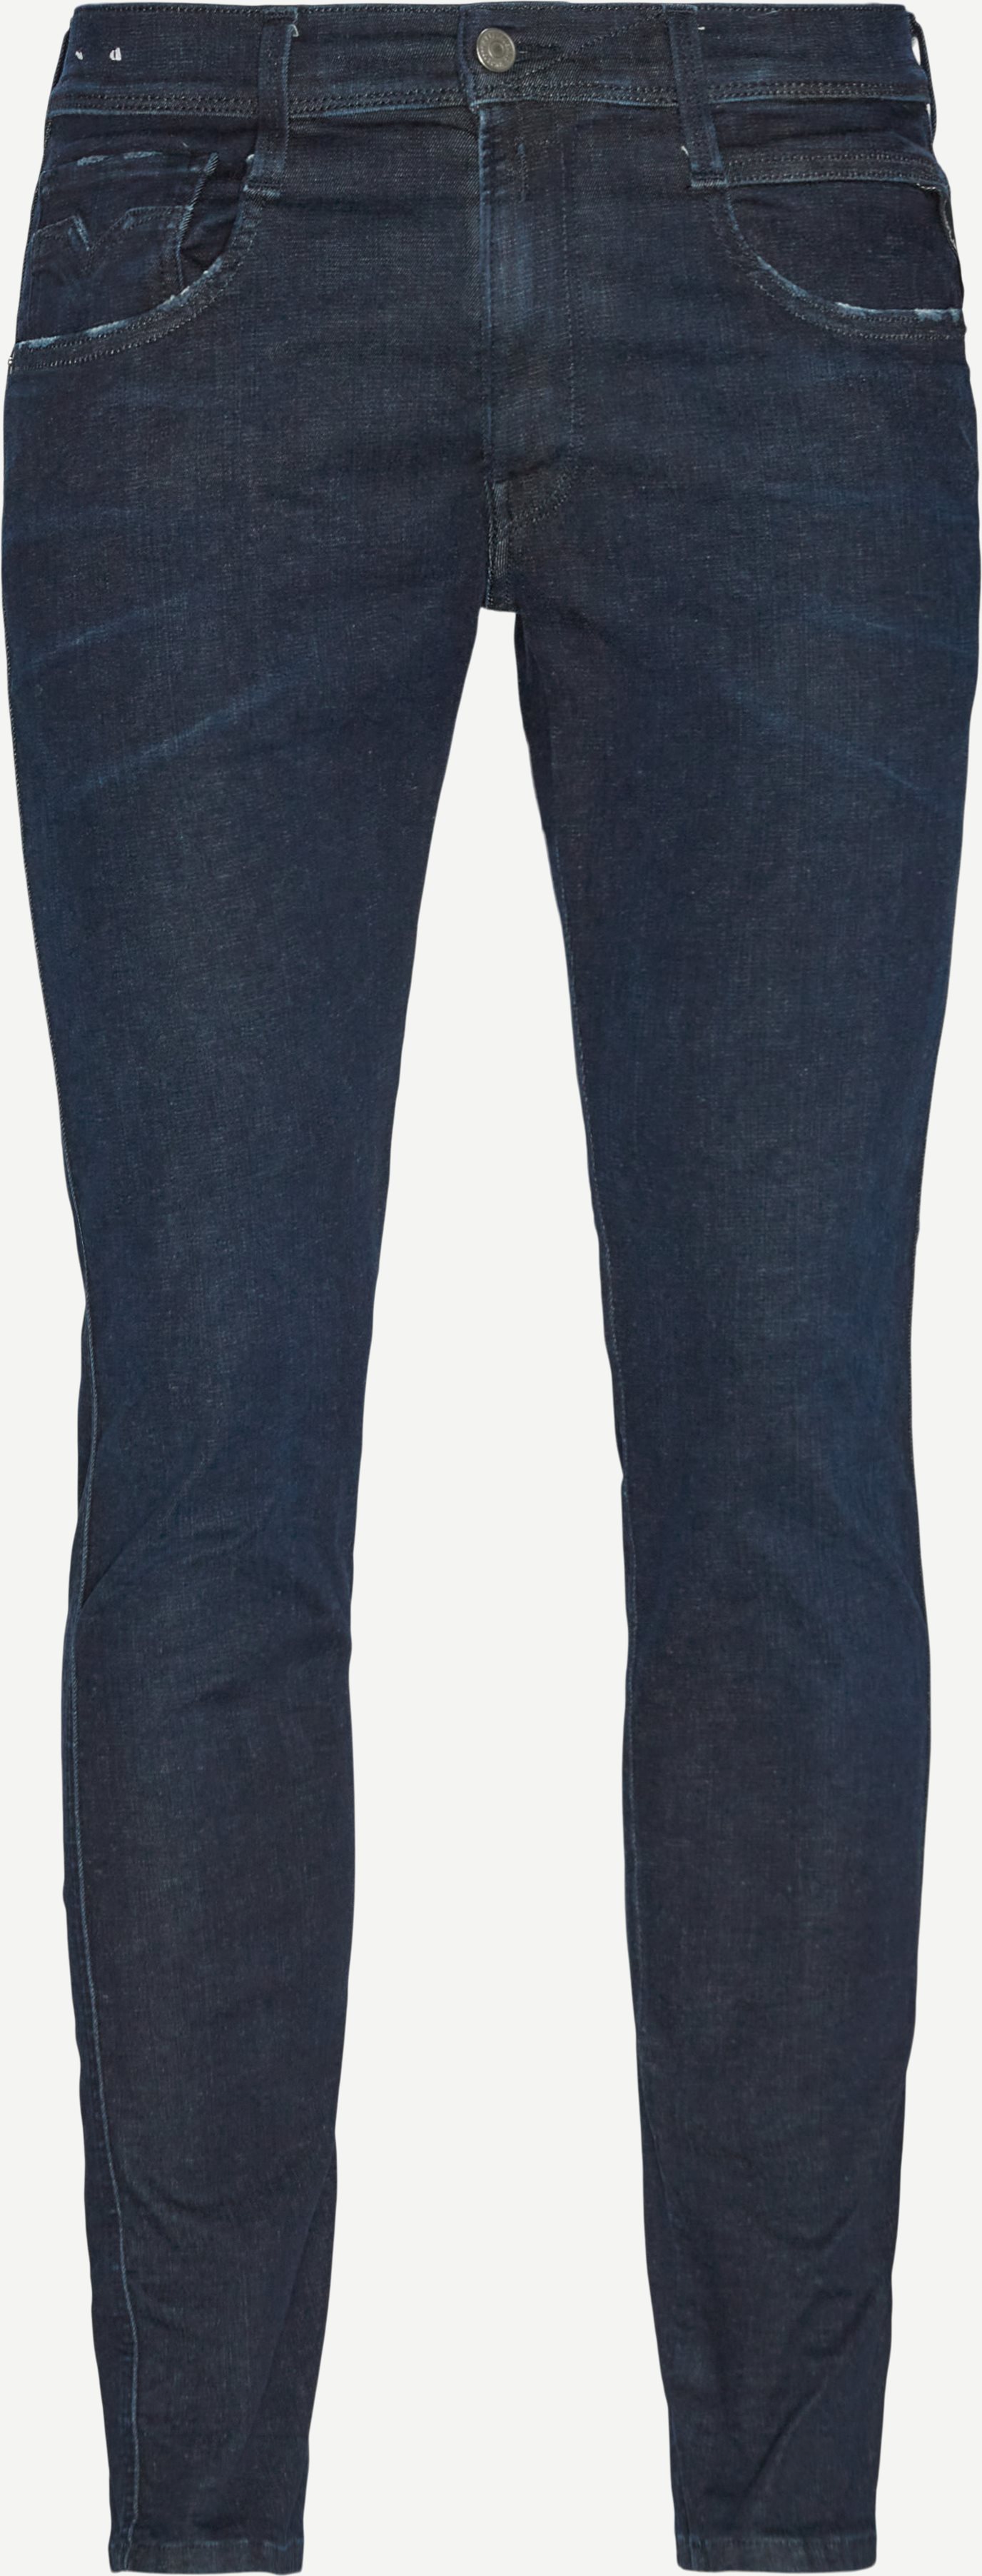 661 E03 Anbass Hyperflex-Jeans - Jeans - Slim fit - Jeans-Blau